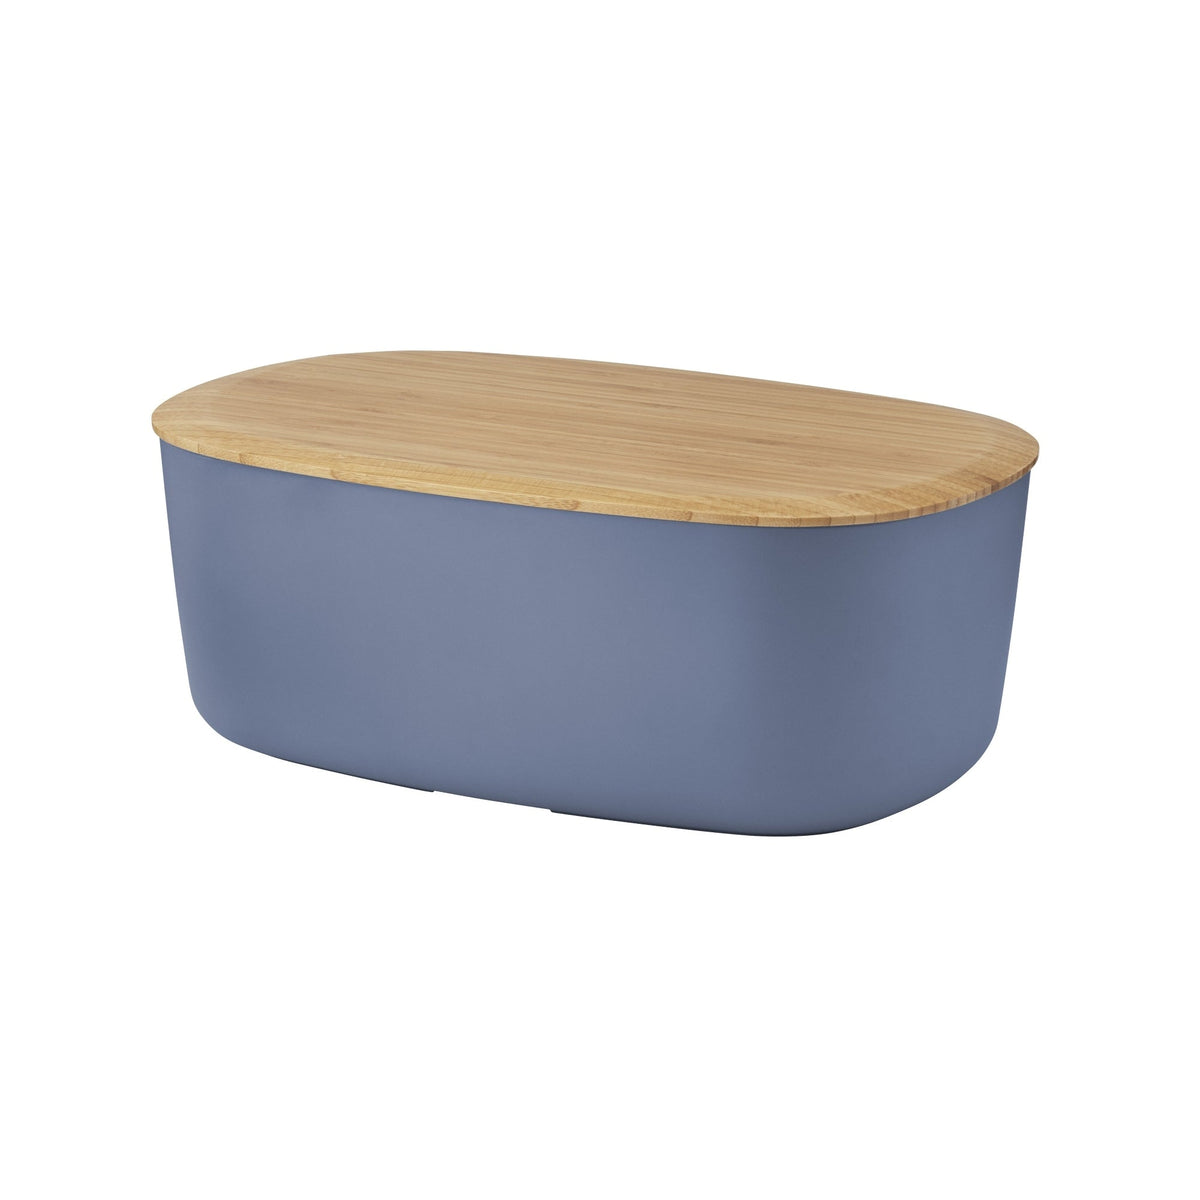 RigTig BOX-IT leipälaatikko sininen - Laatukaluste